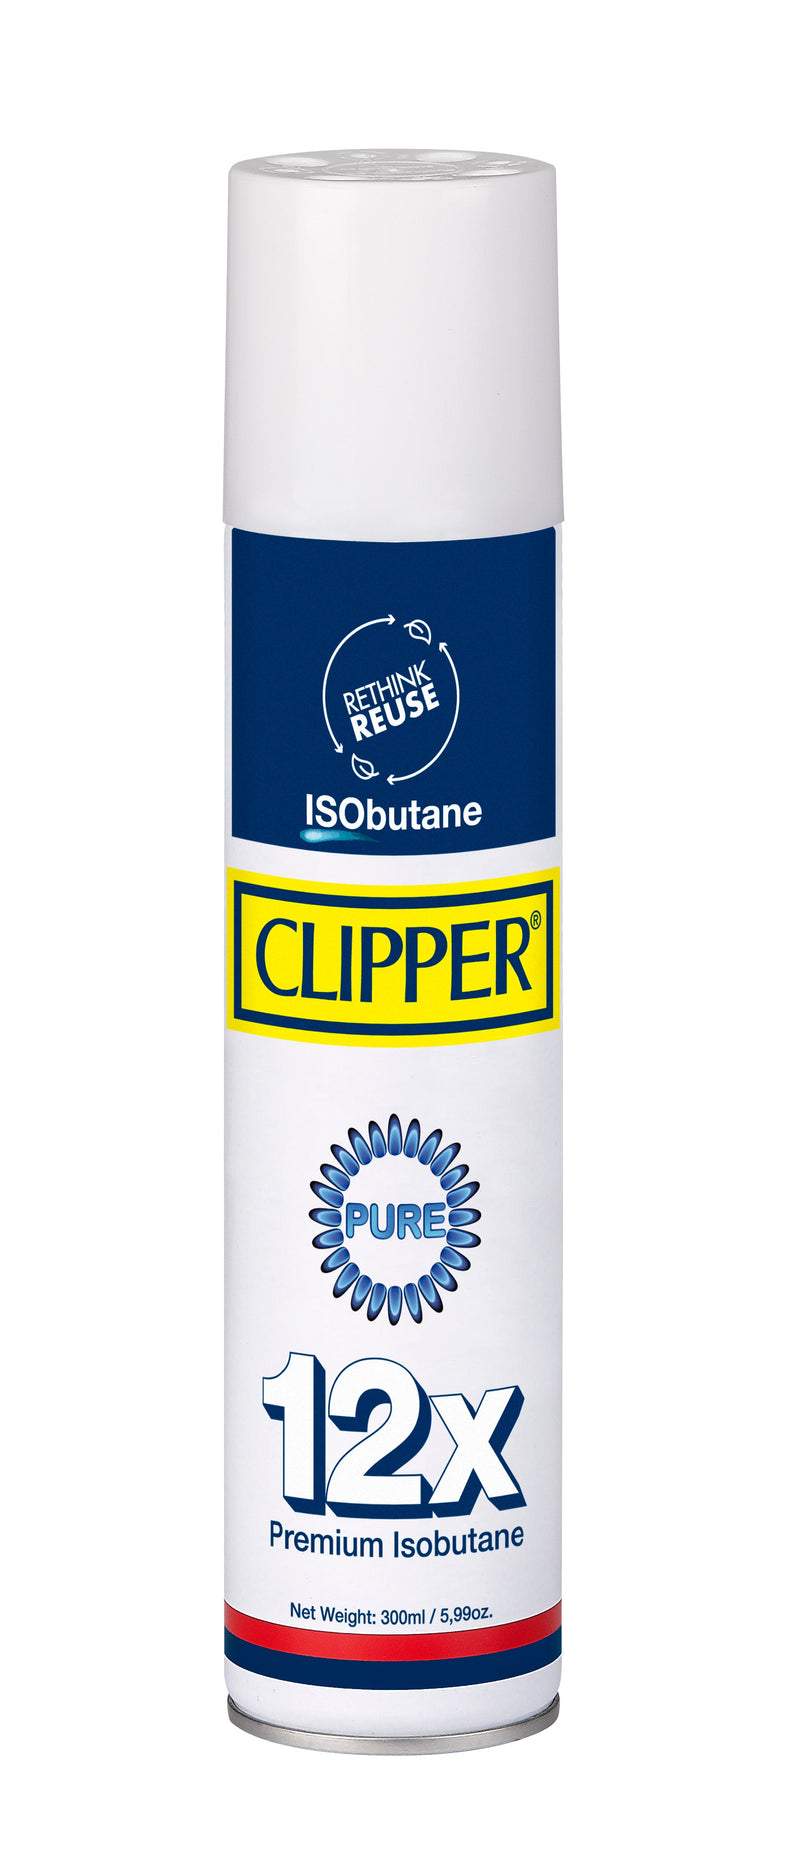 Clipper Isobutane